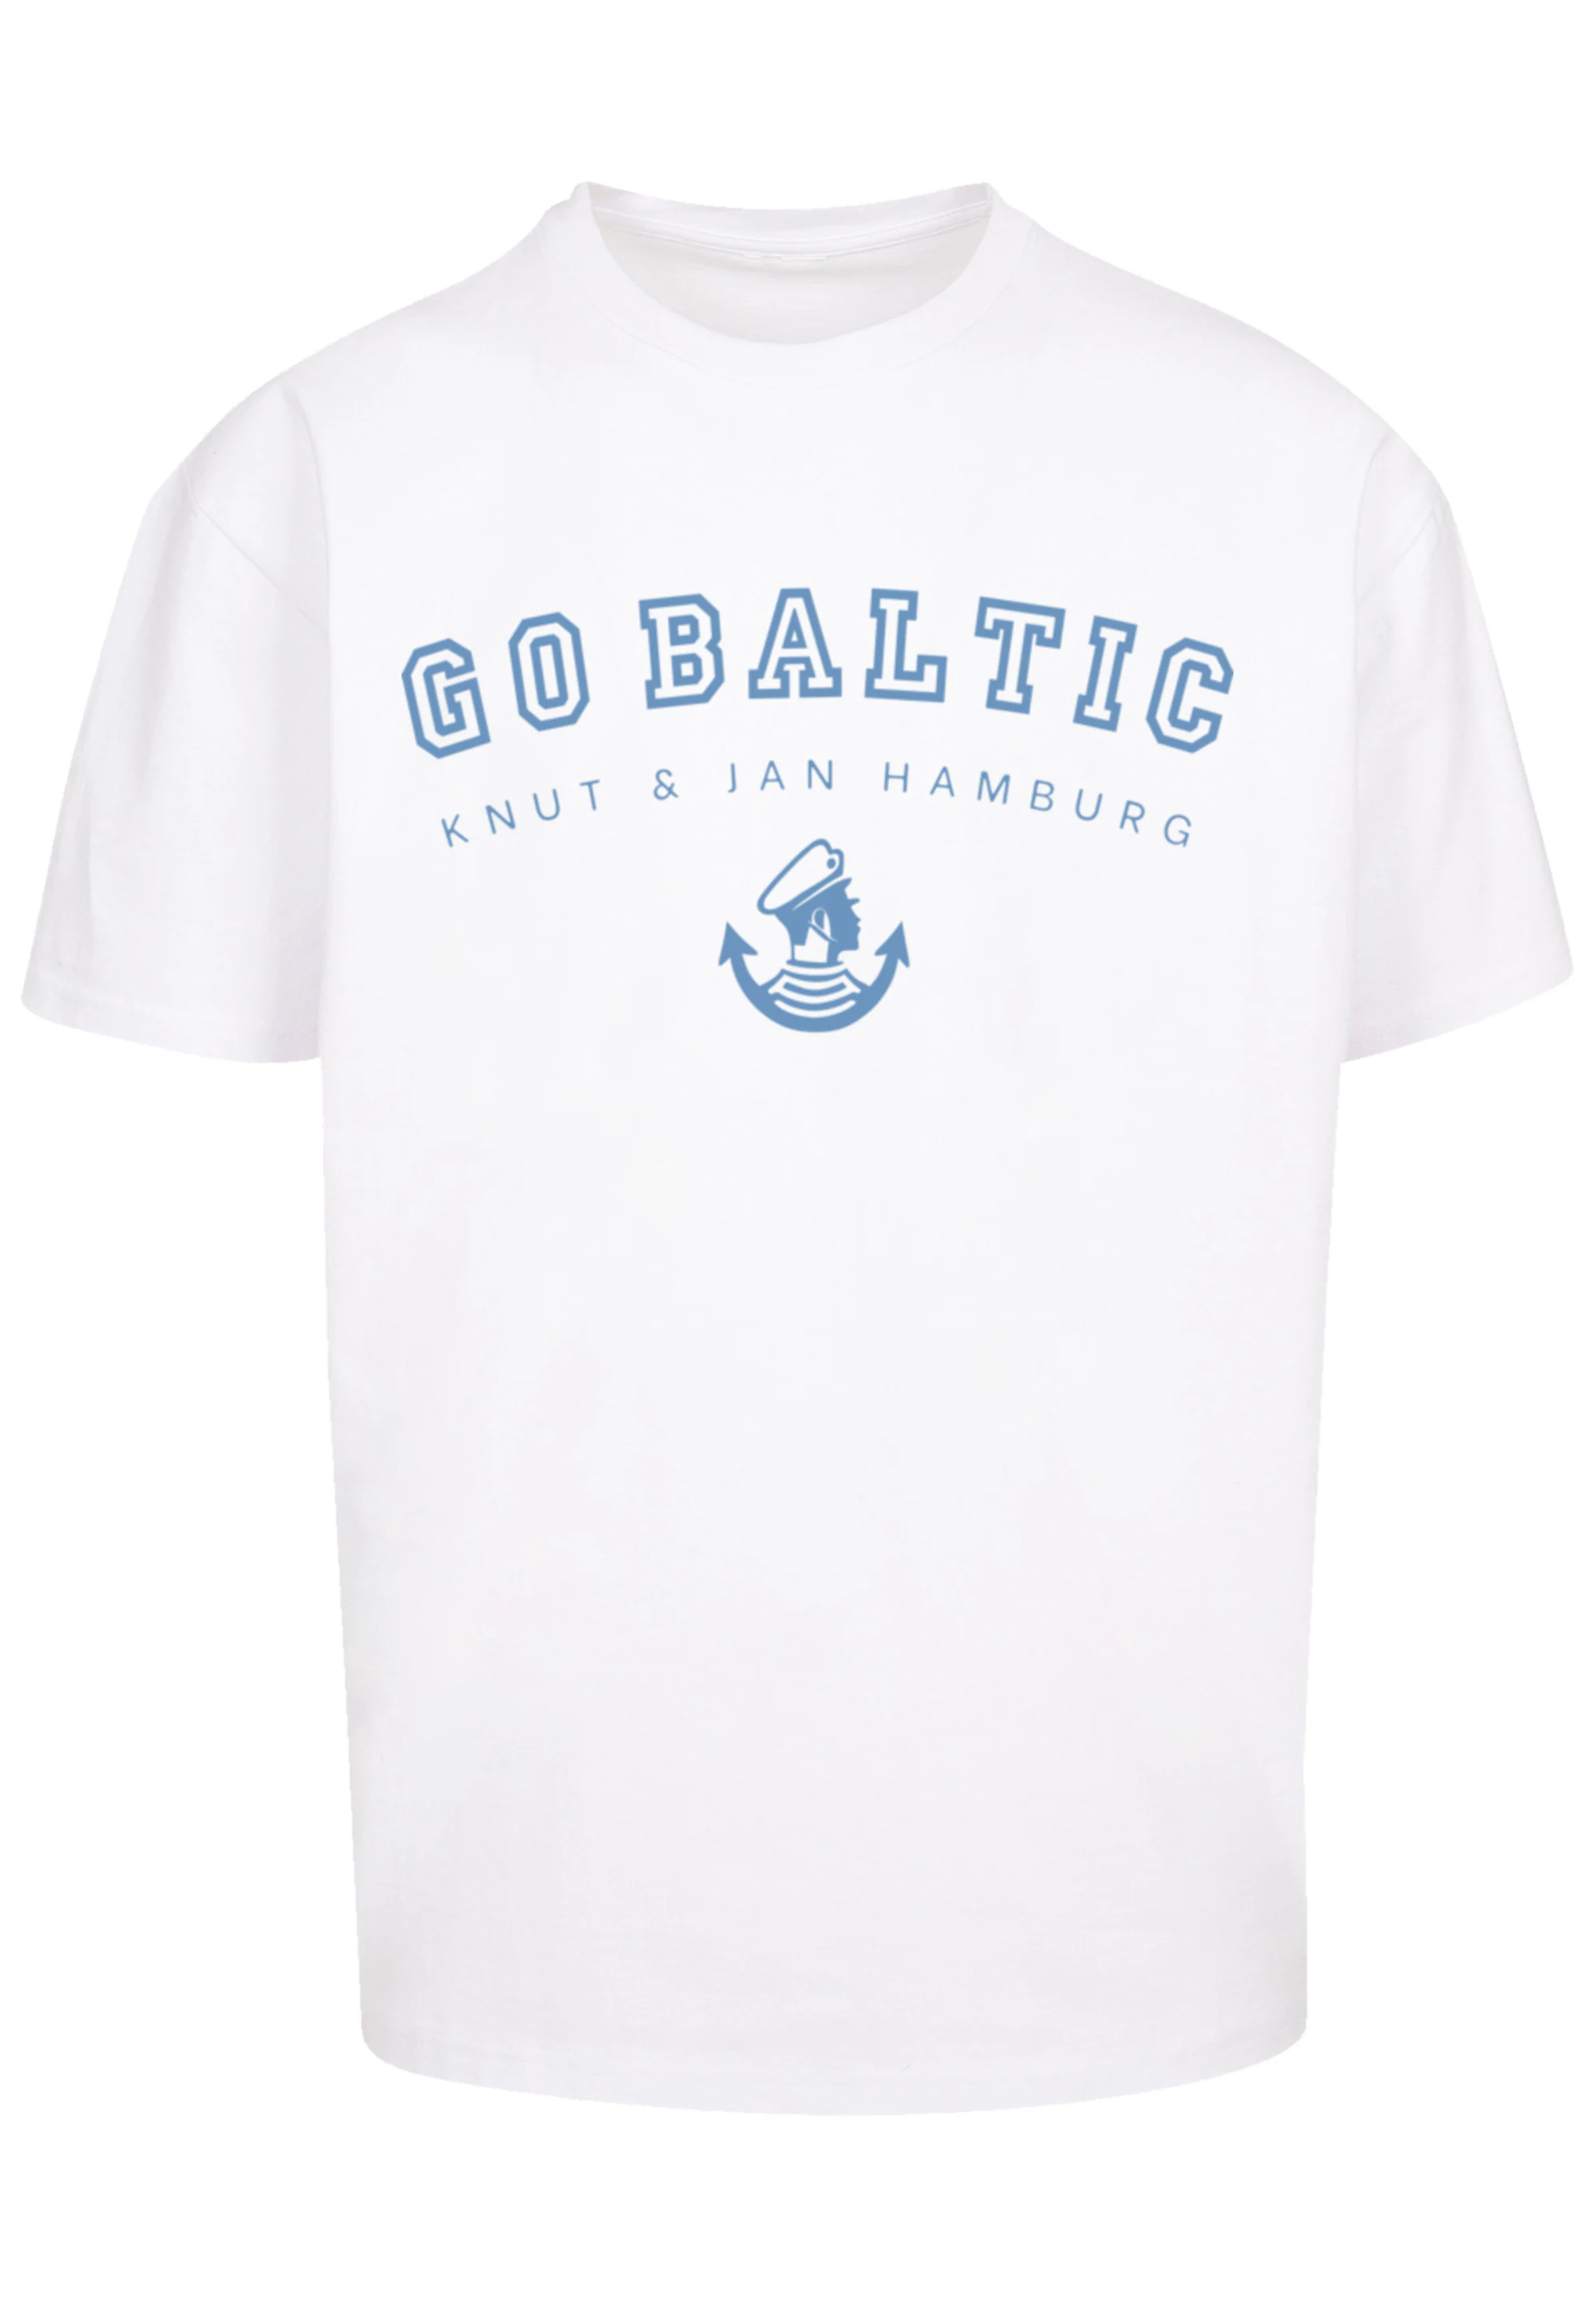 F4NT4STIC T-Shirt "Go Baltic Ostsee Knut & Jan Hamburg", Print günstig online kaufen